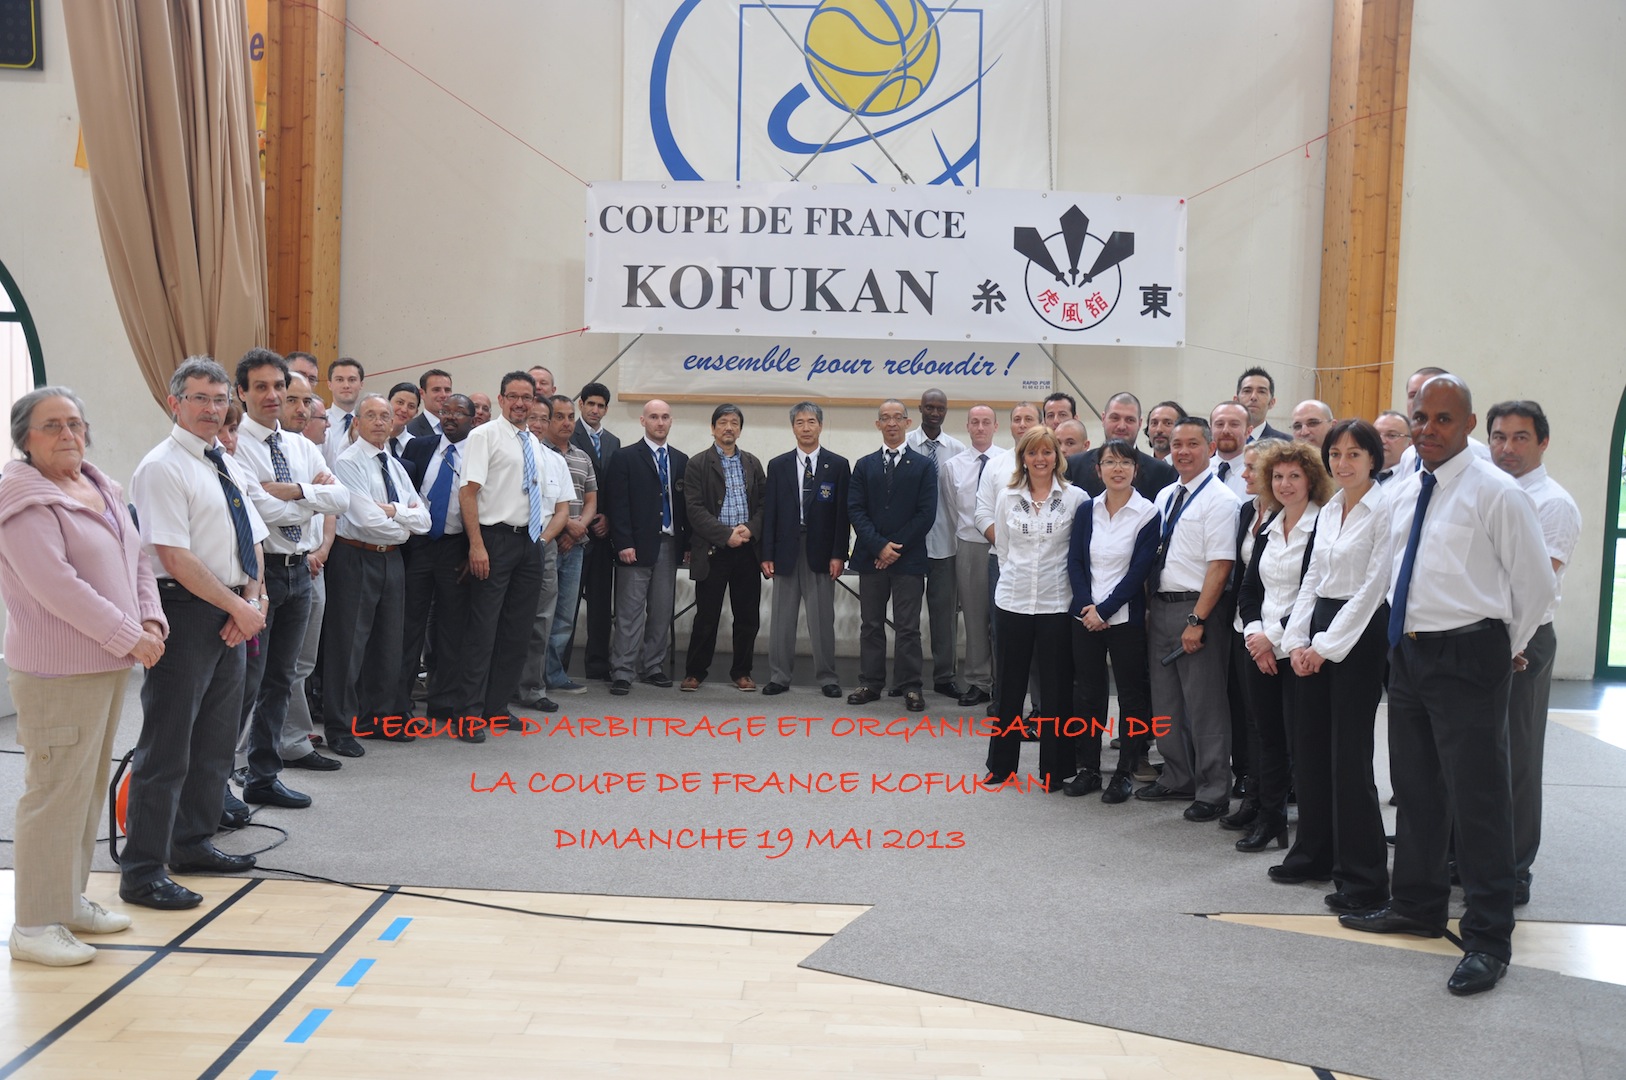 Karate Club de Saint Maur - Coupe de France Kofukan 